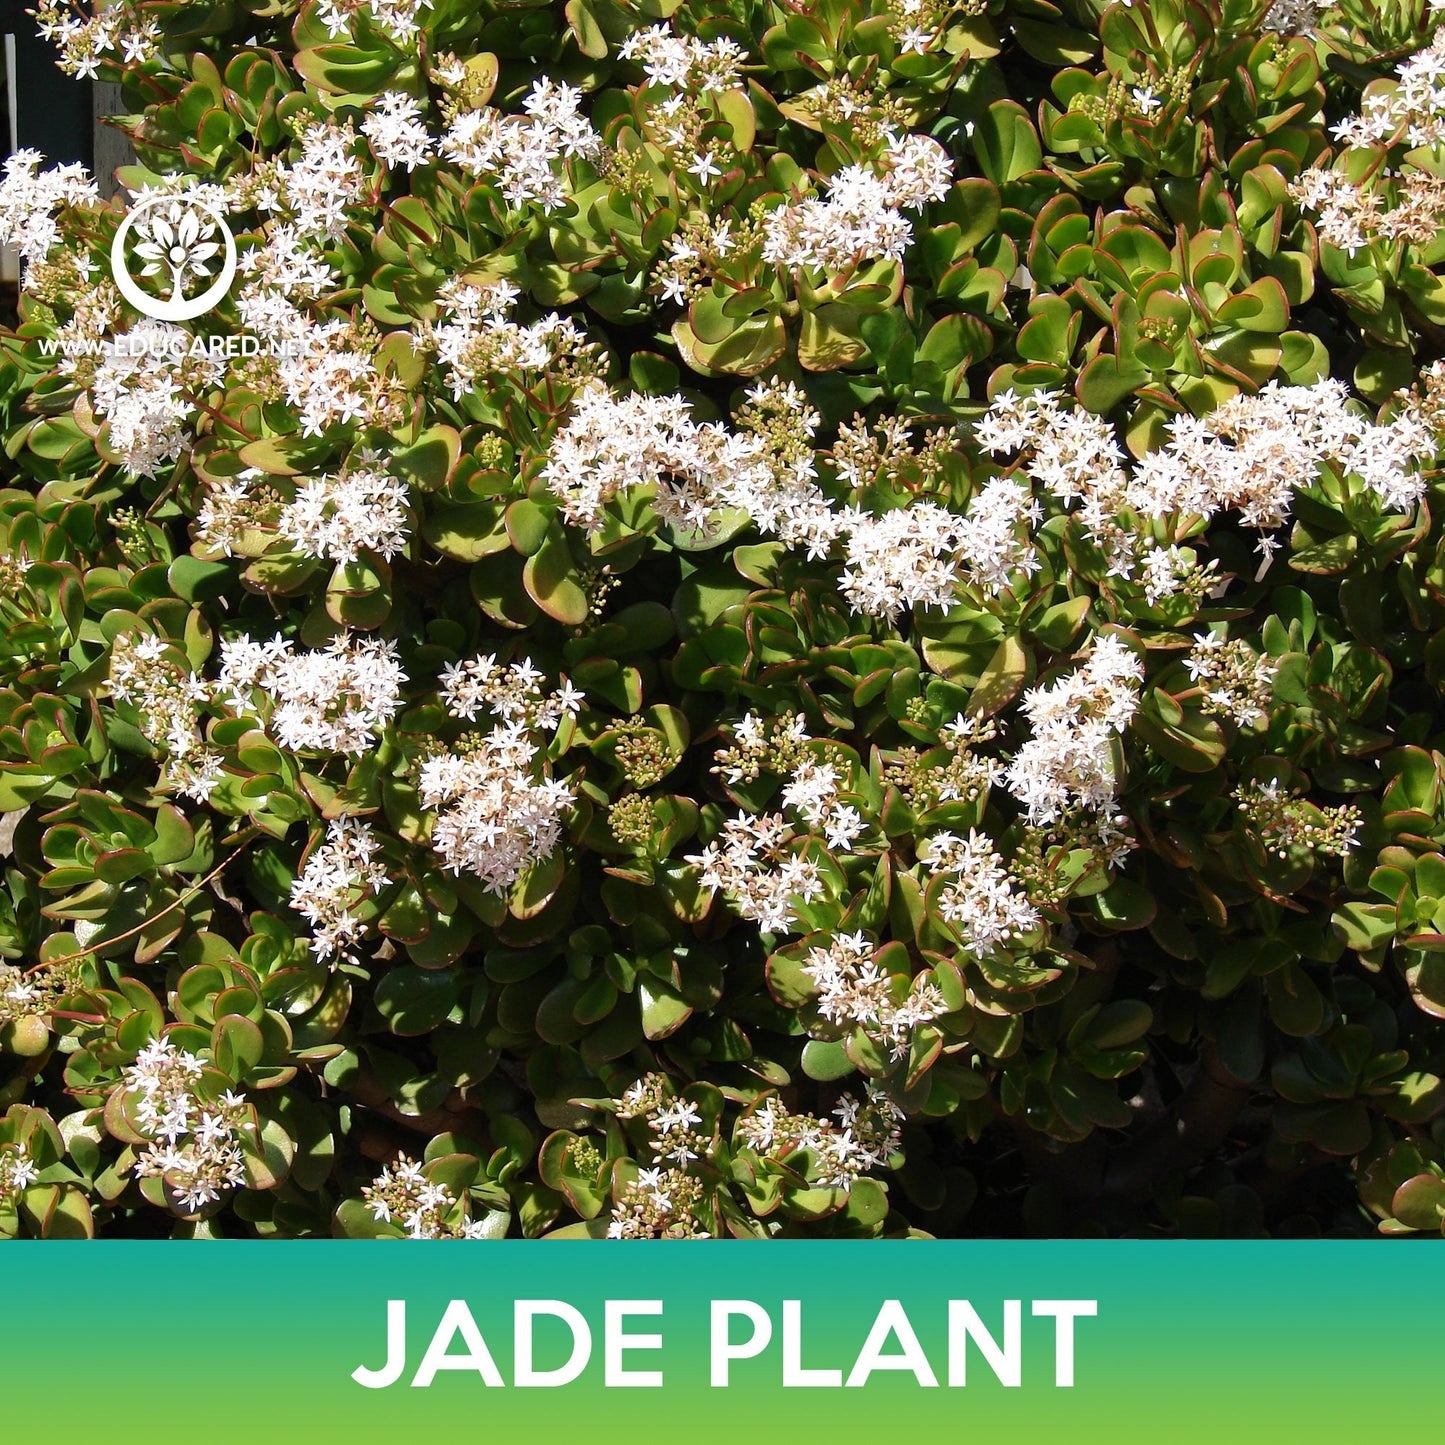 Jade Plant Succulent Seeds, Crassula Ovata